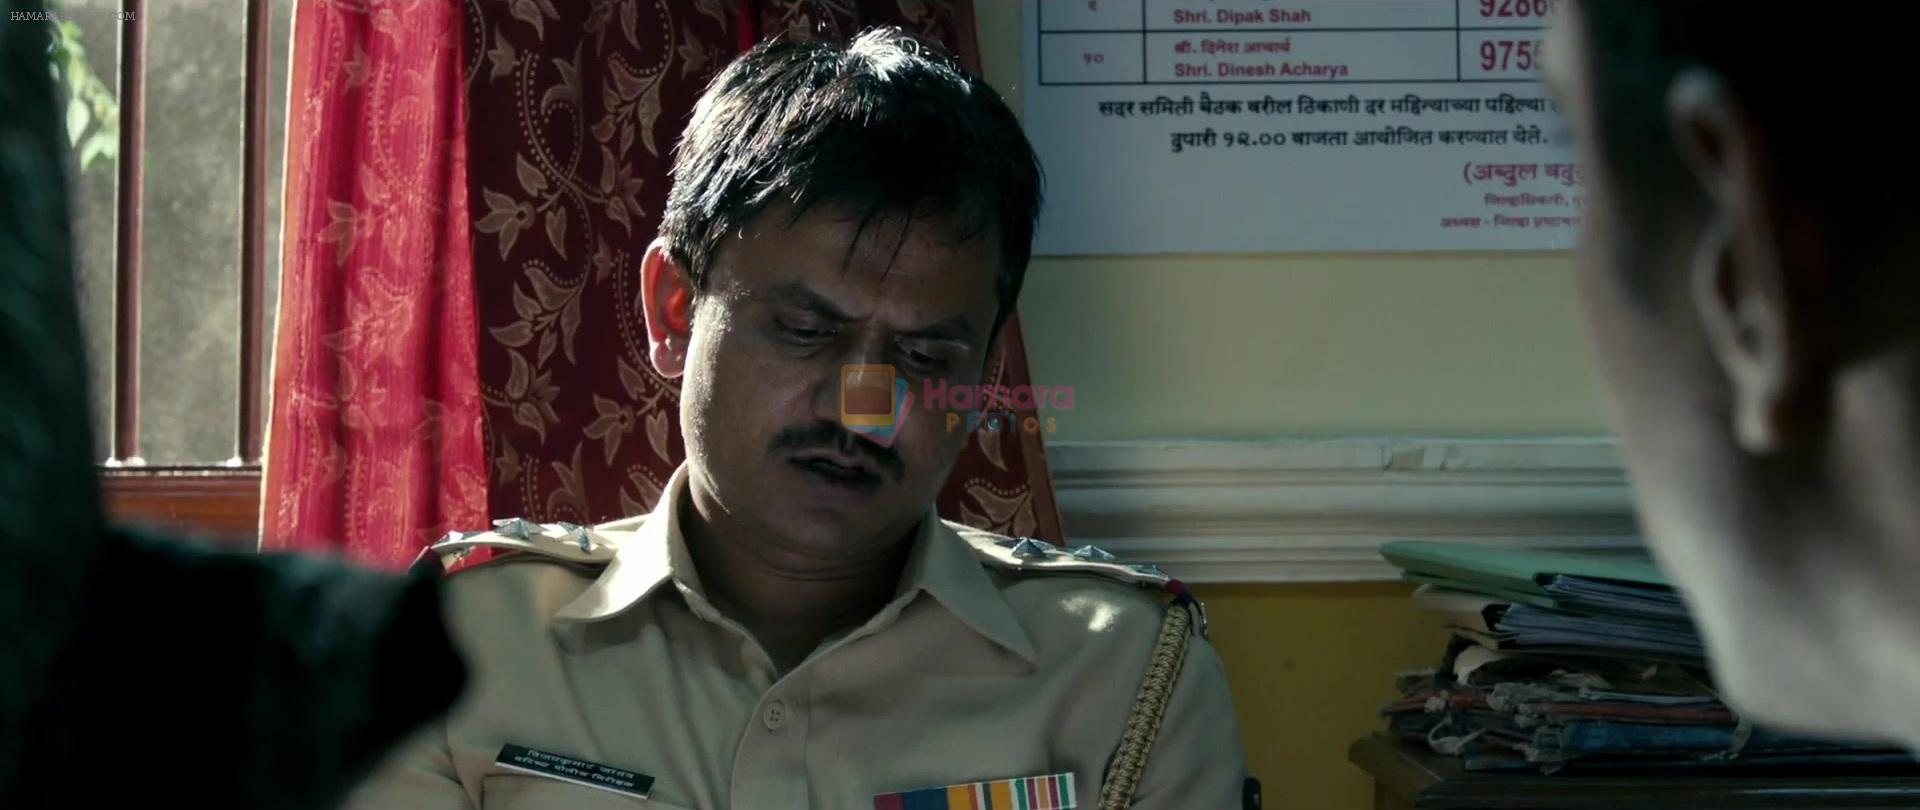 Girish Kulkarni in still from the movie Ugly